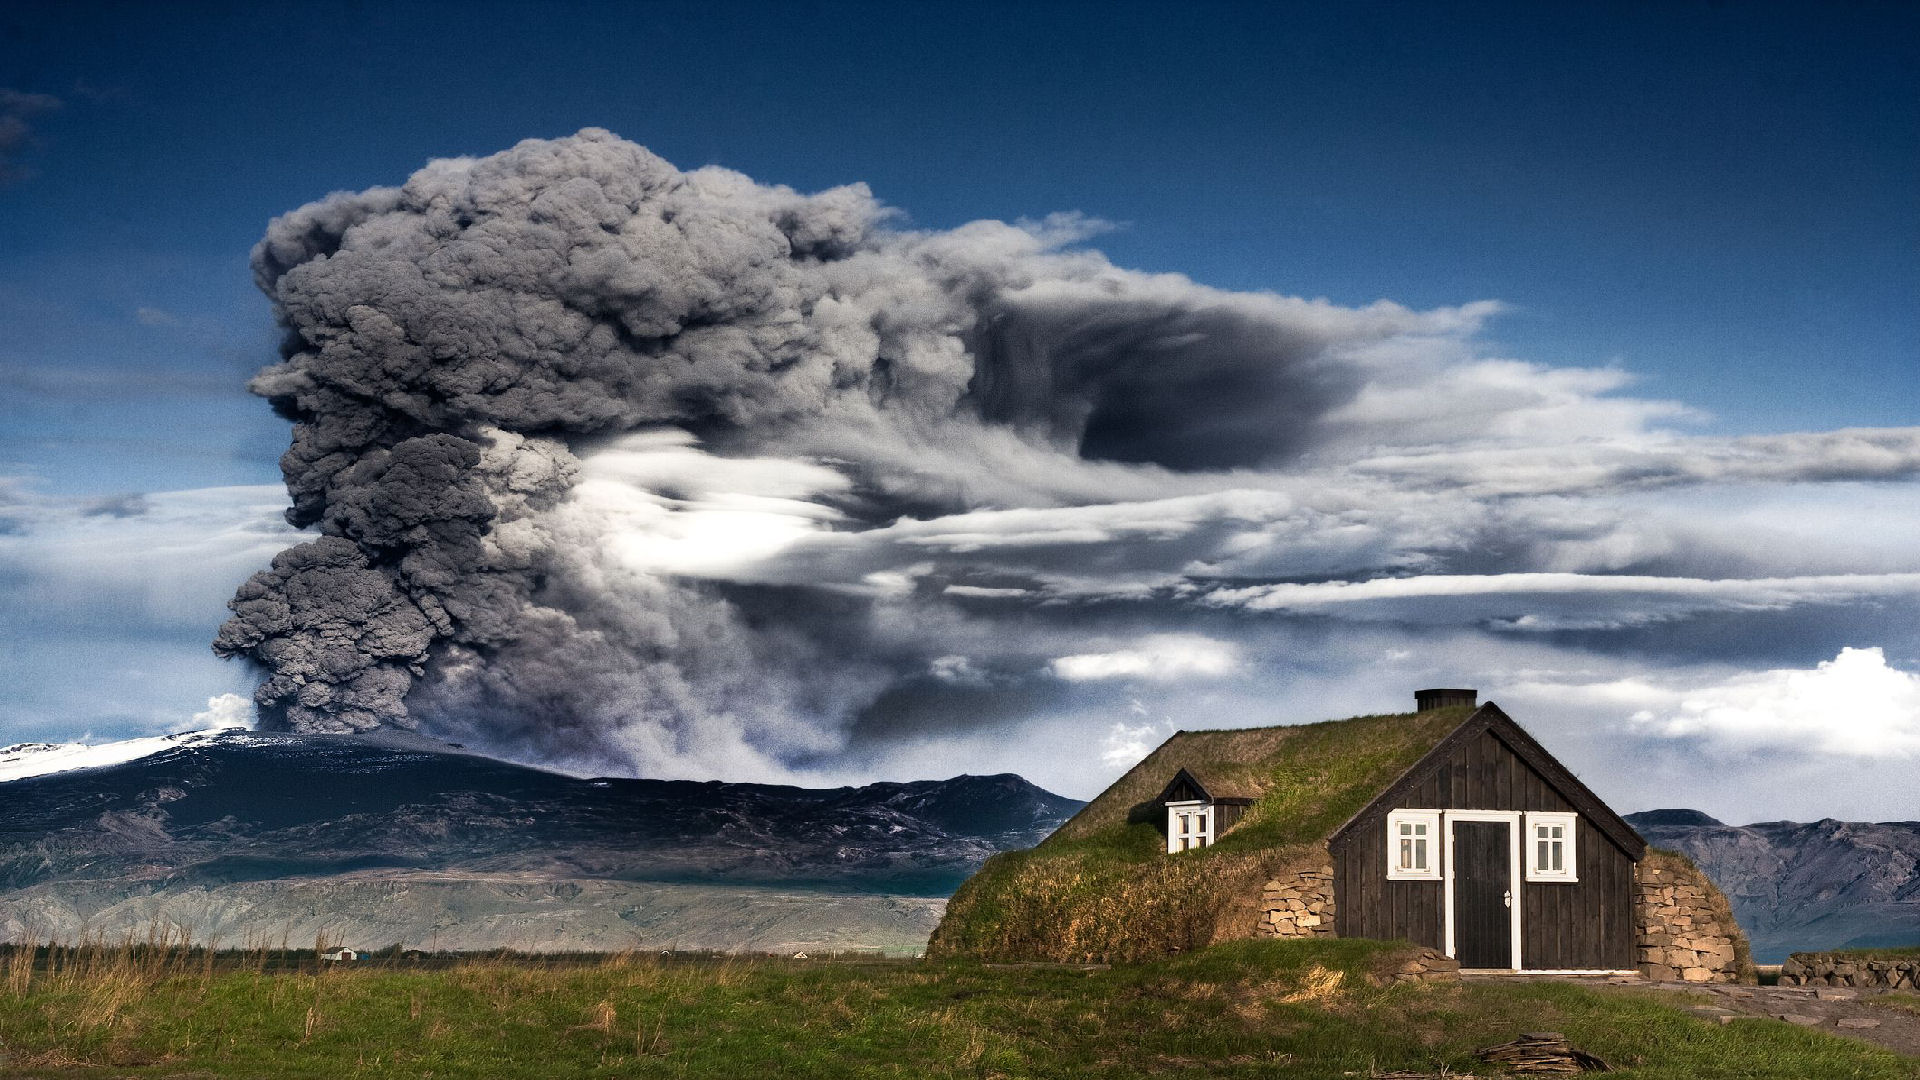 Temblores no dejan dormir en Islandia; van 40 mil